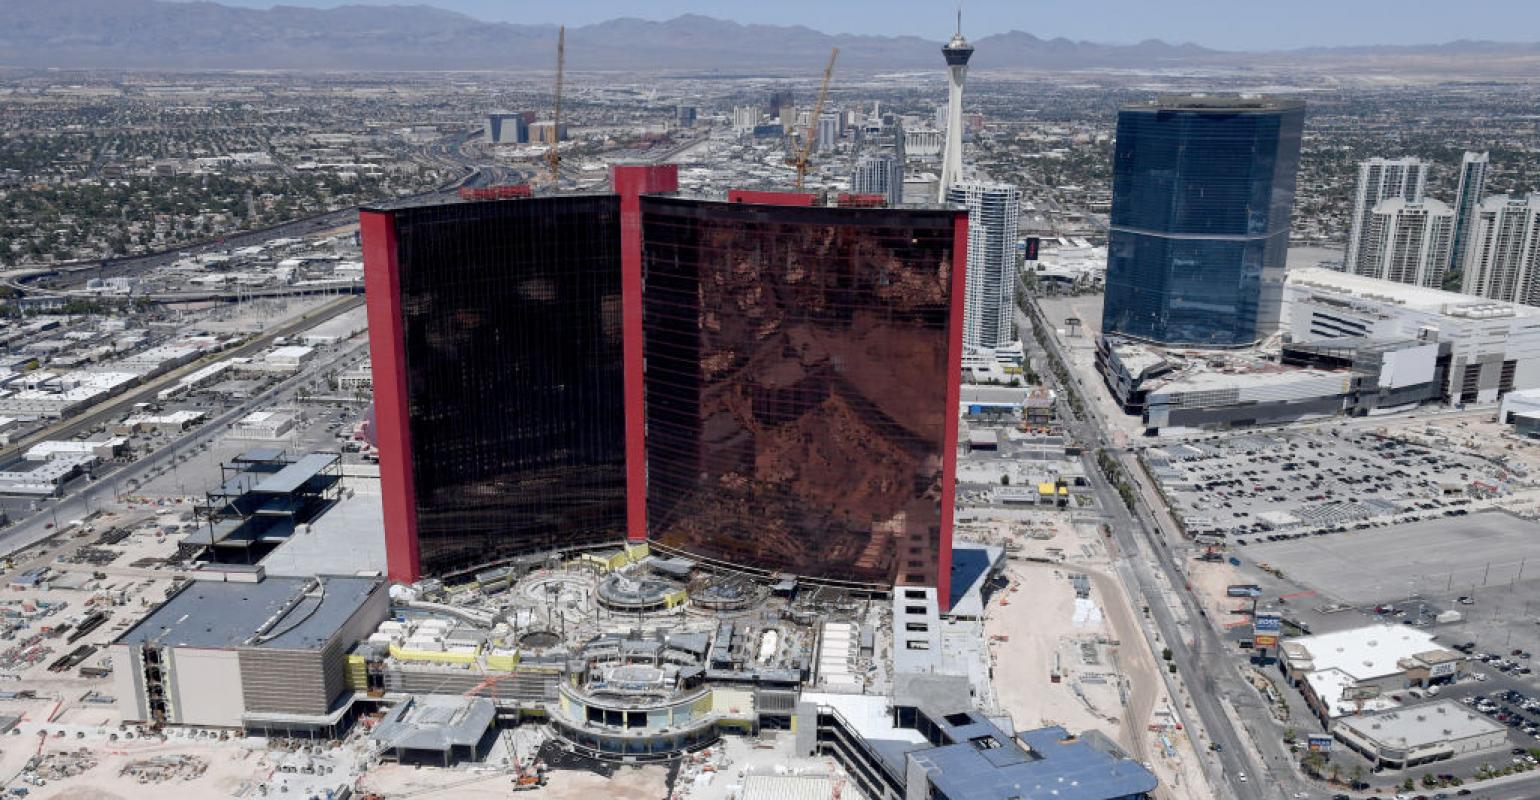 Resorts World Las Vegas to Open June 24, 2021